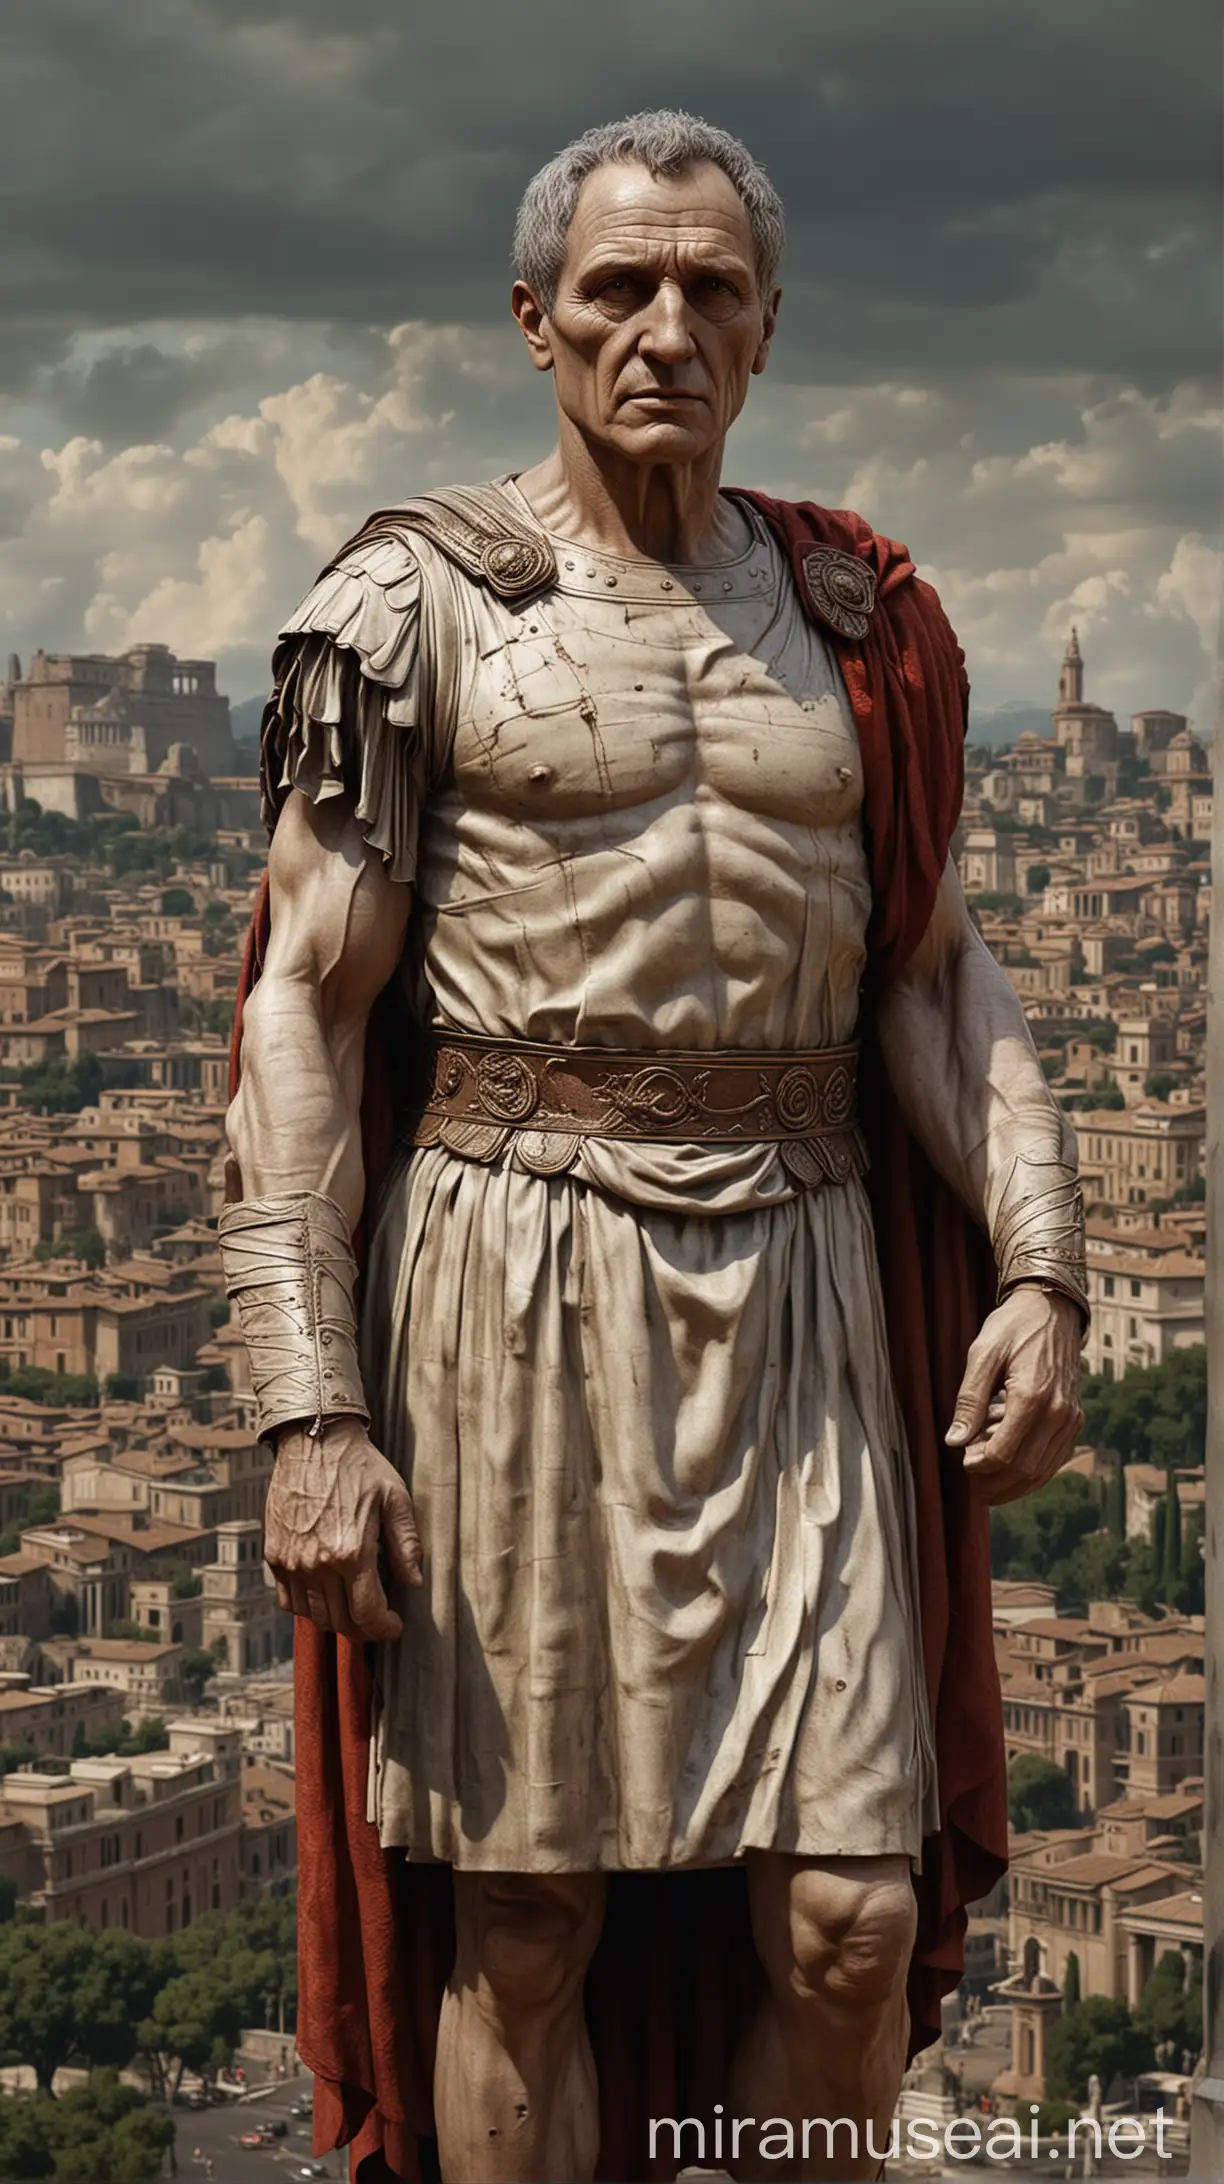 Reflective Julius Caesar Contemplating Legacy in HyperRealistic Scene